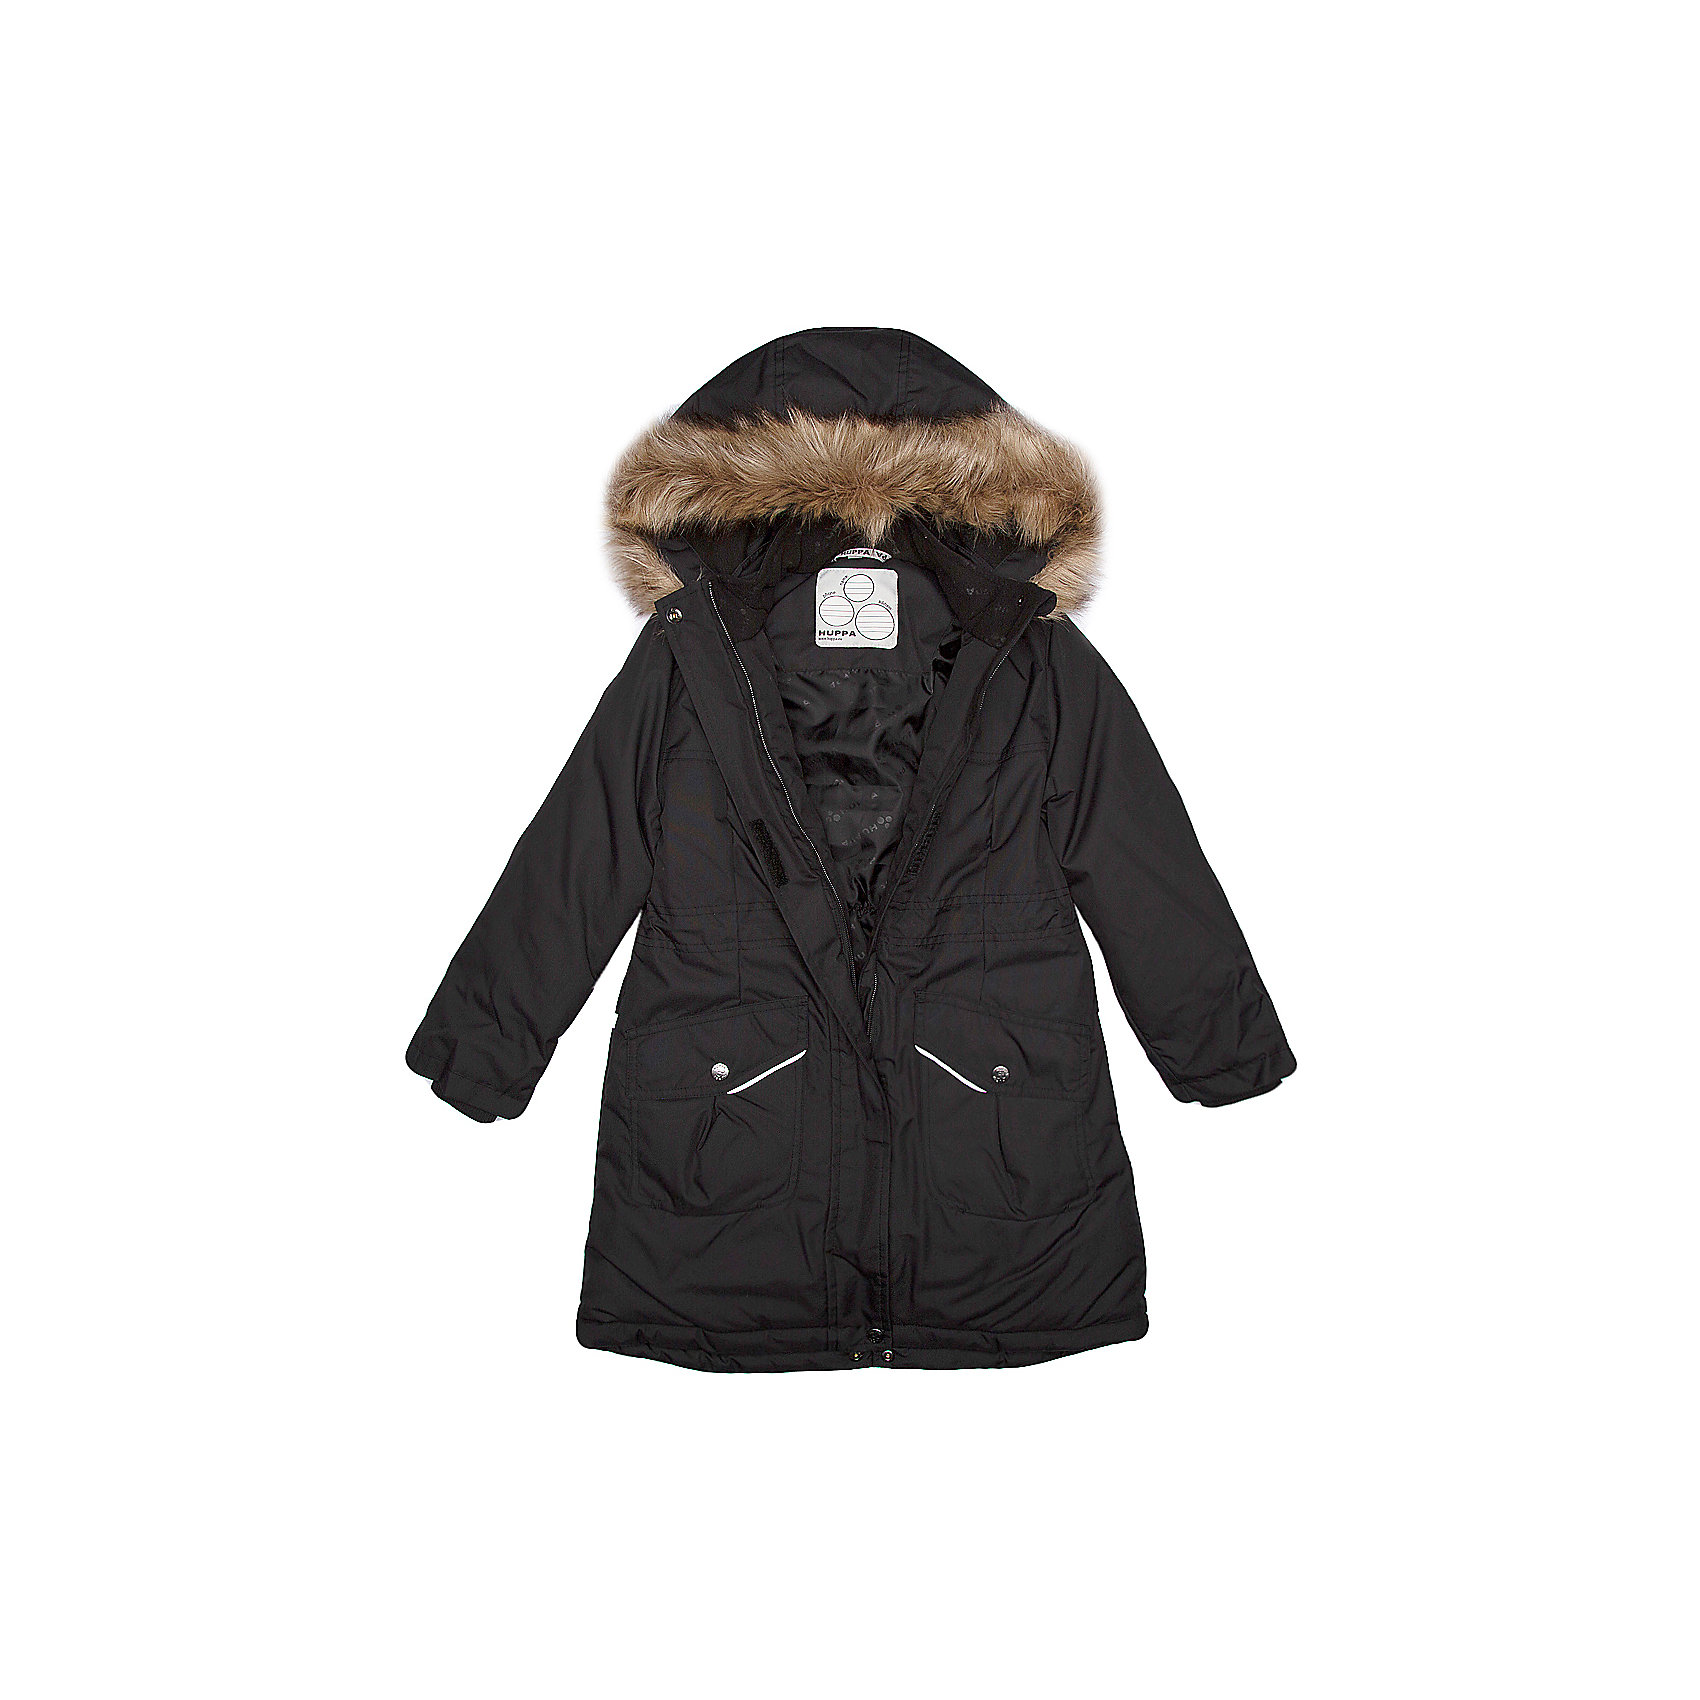 Утеплённая куртка Mona 2 HUPPA 16520682